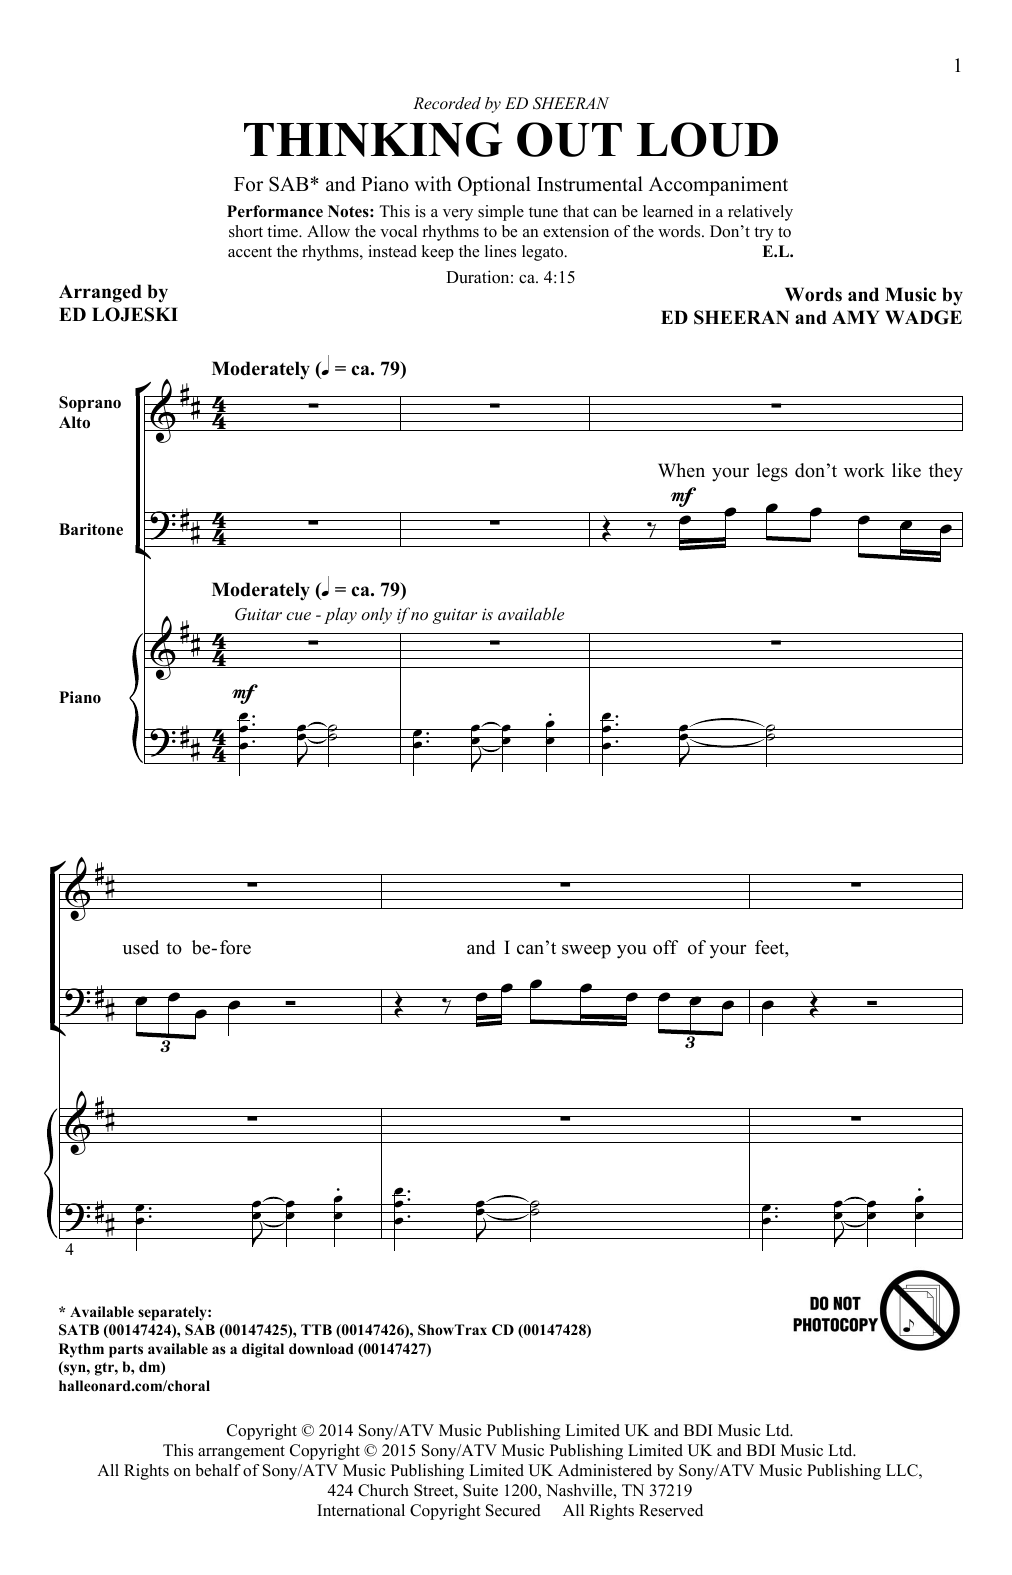 Ed Sheeran Thinking Out Loud (arr. Ed Lojeski) Sheet Music Notes & Chords for SATB - Download or Print PDF